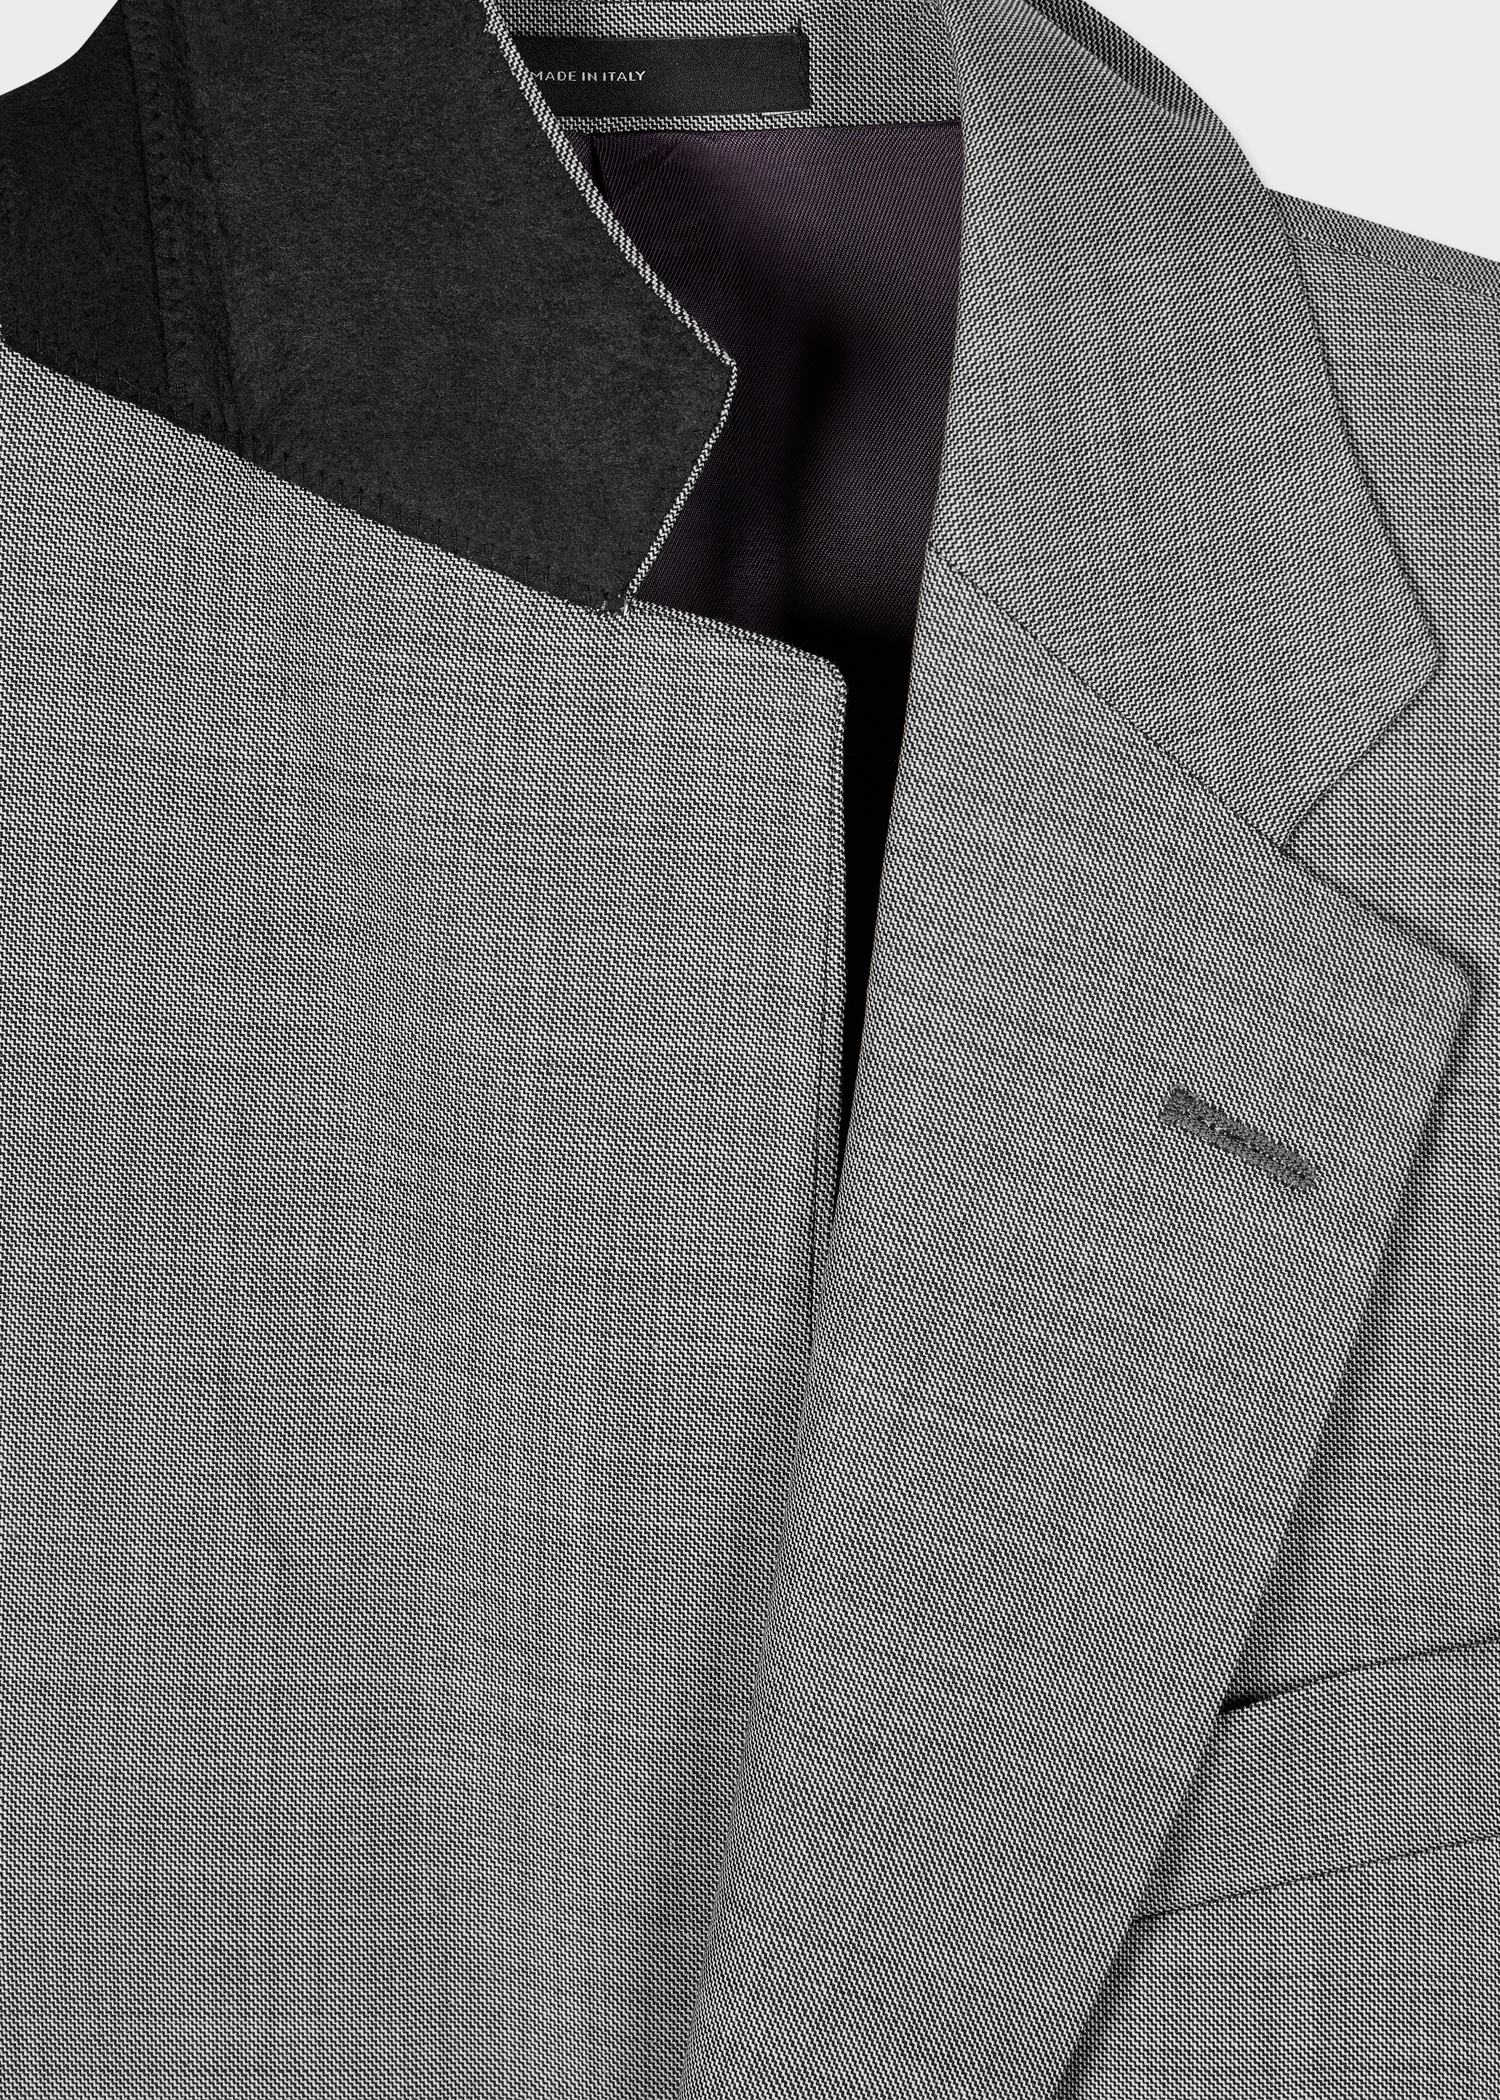 The Brierley - Light Grey Sharkskin Wool Suit - 4